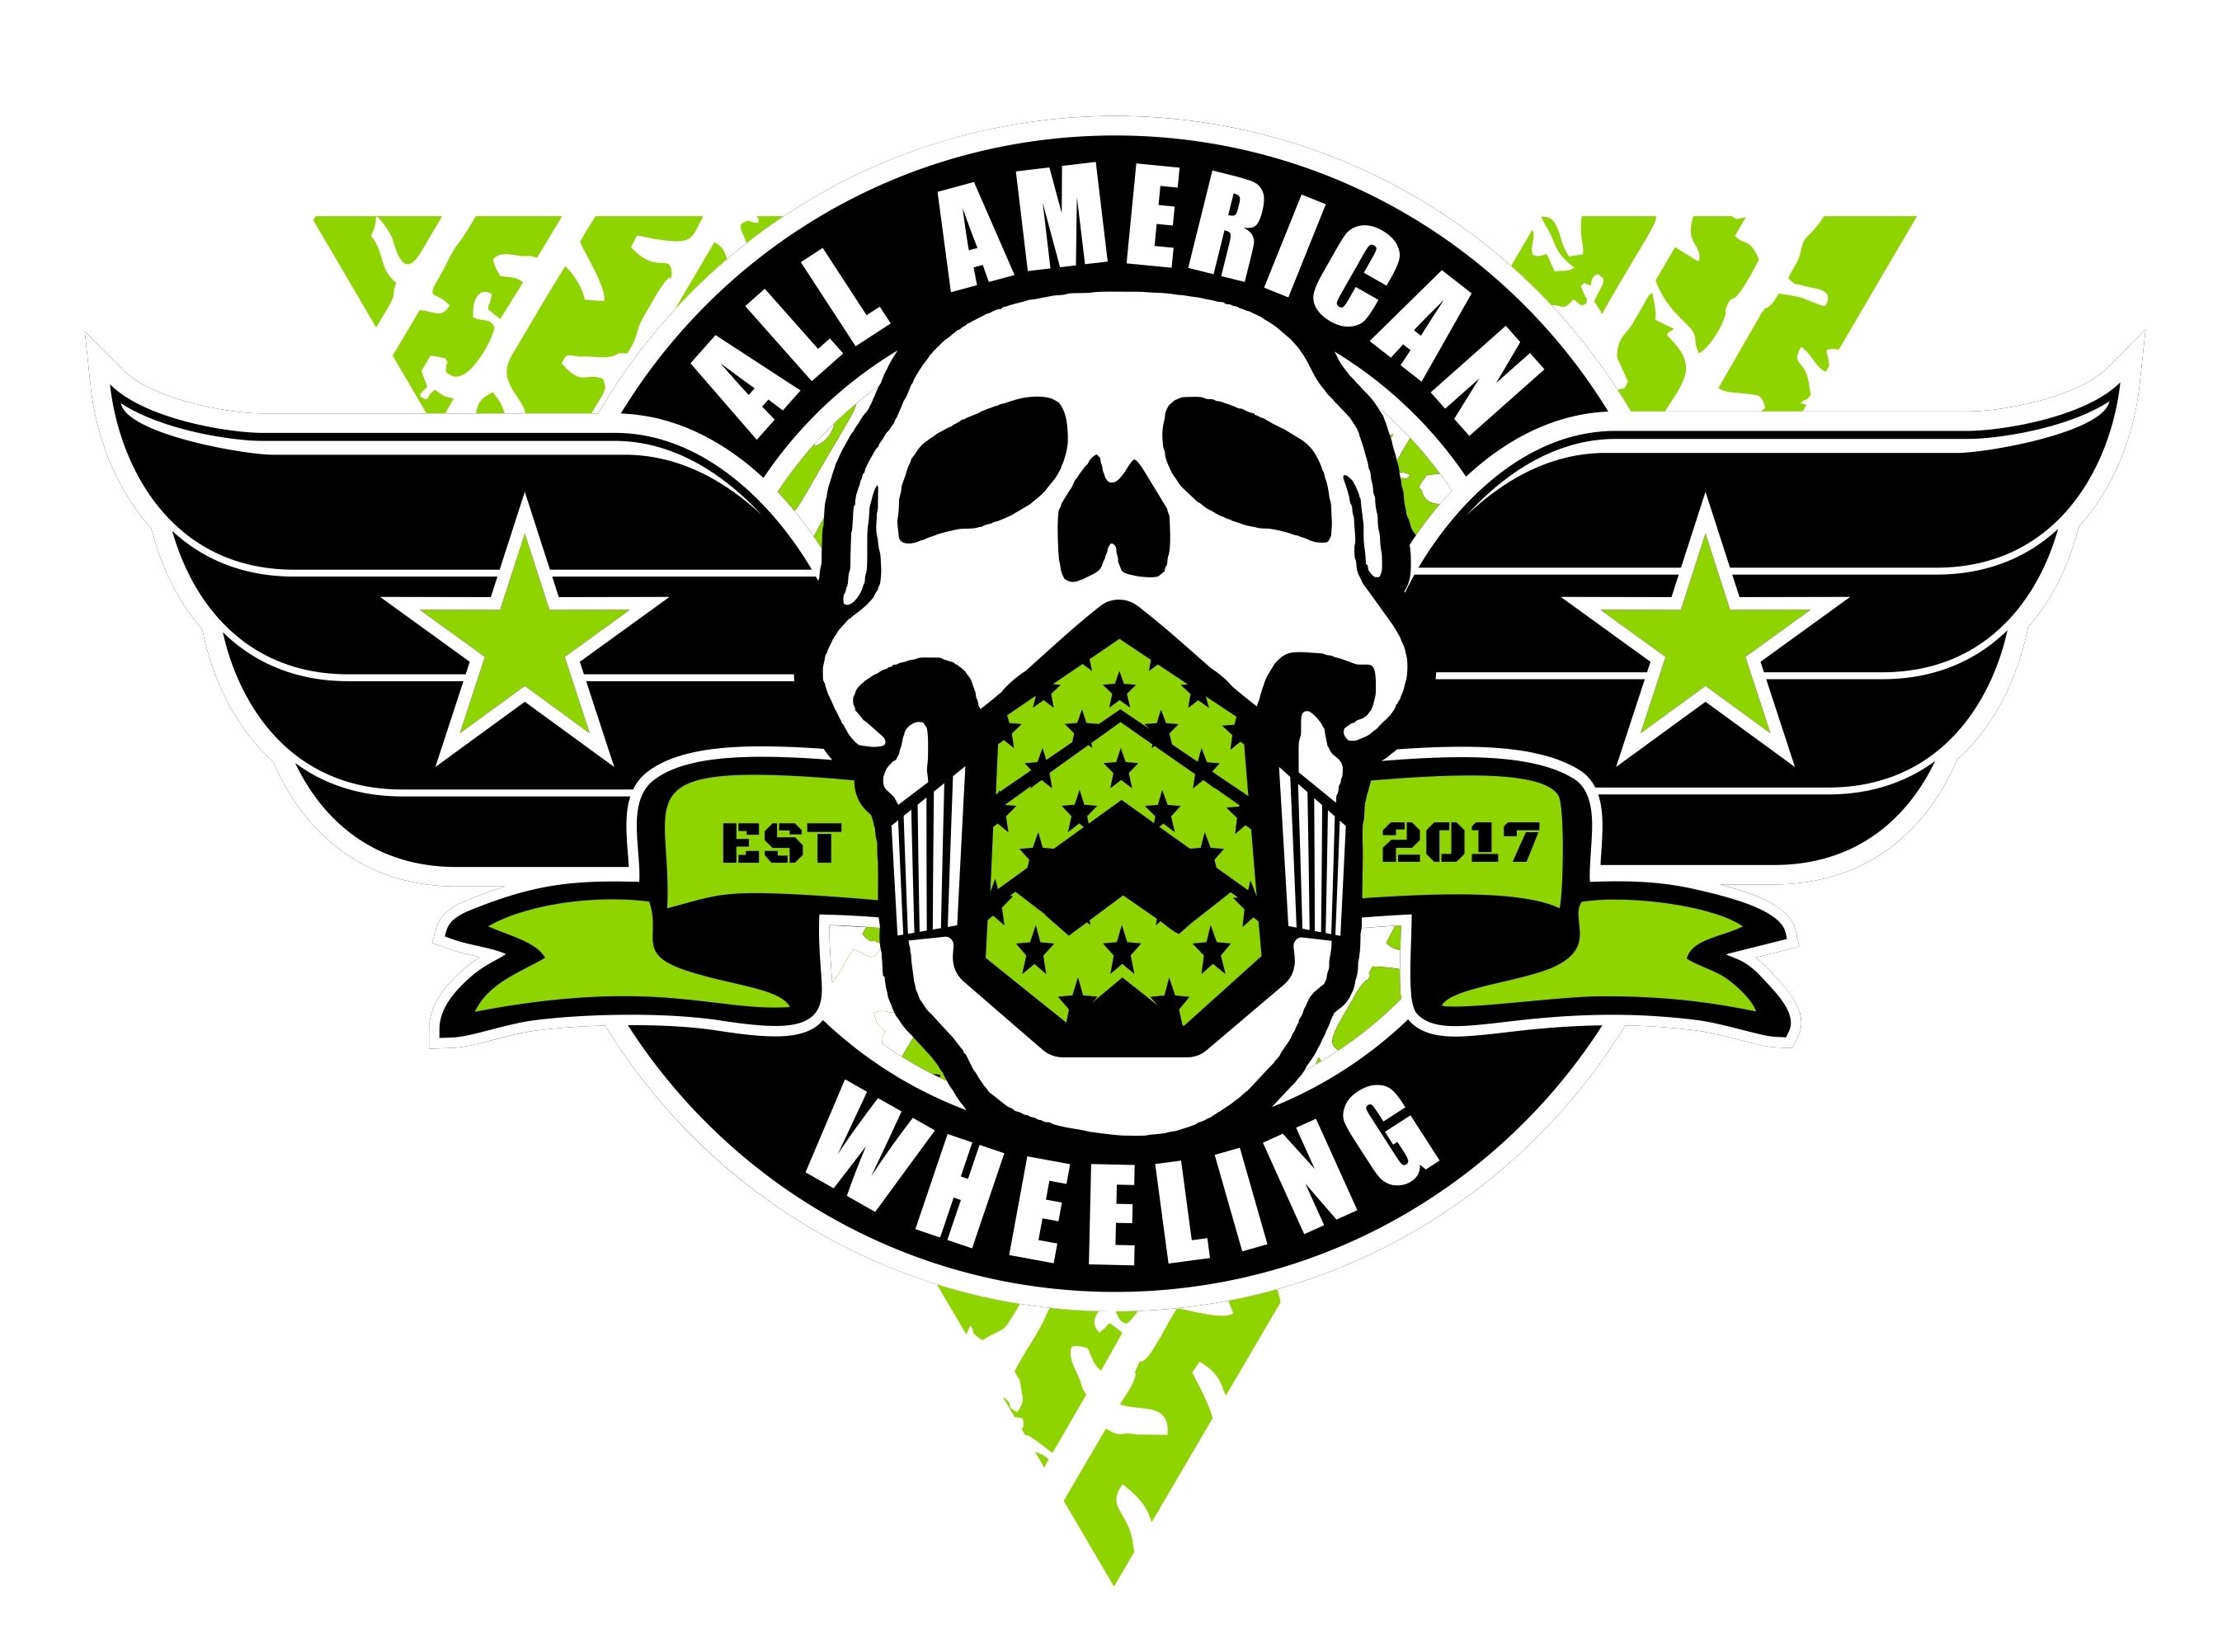 All American Wheeling 4x4 Inc